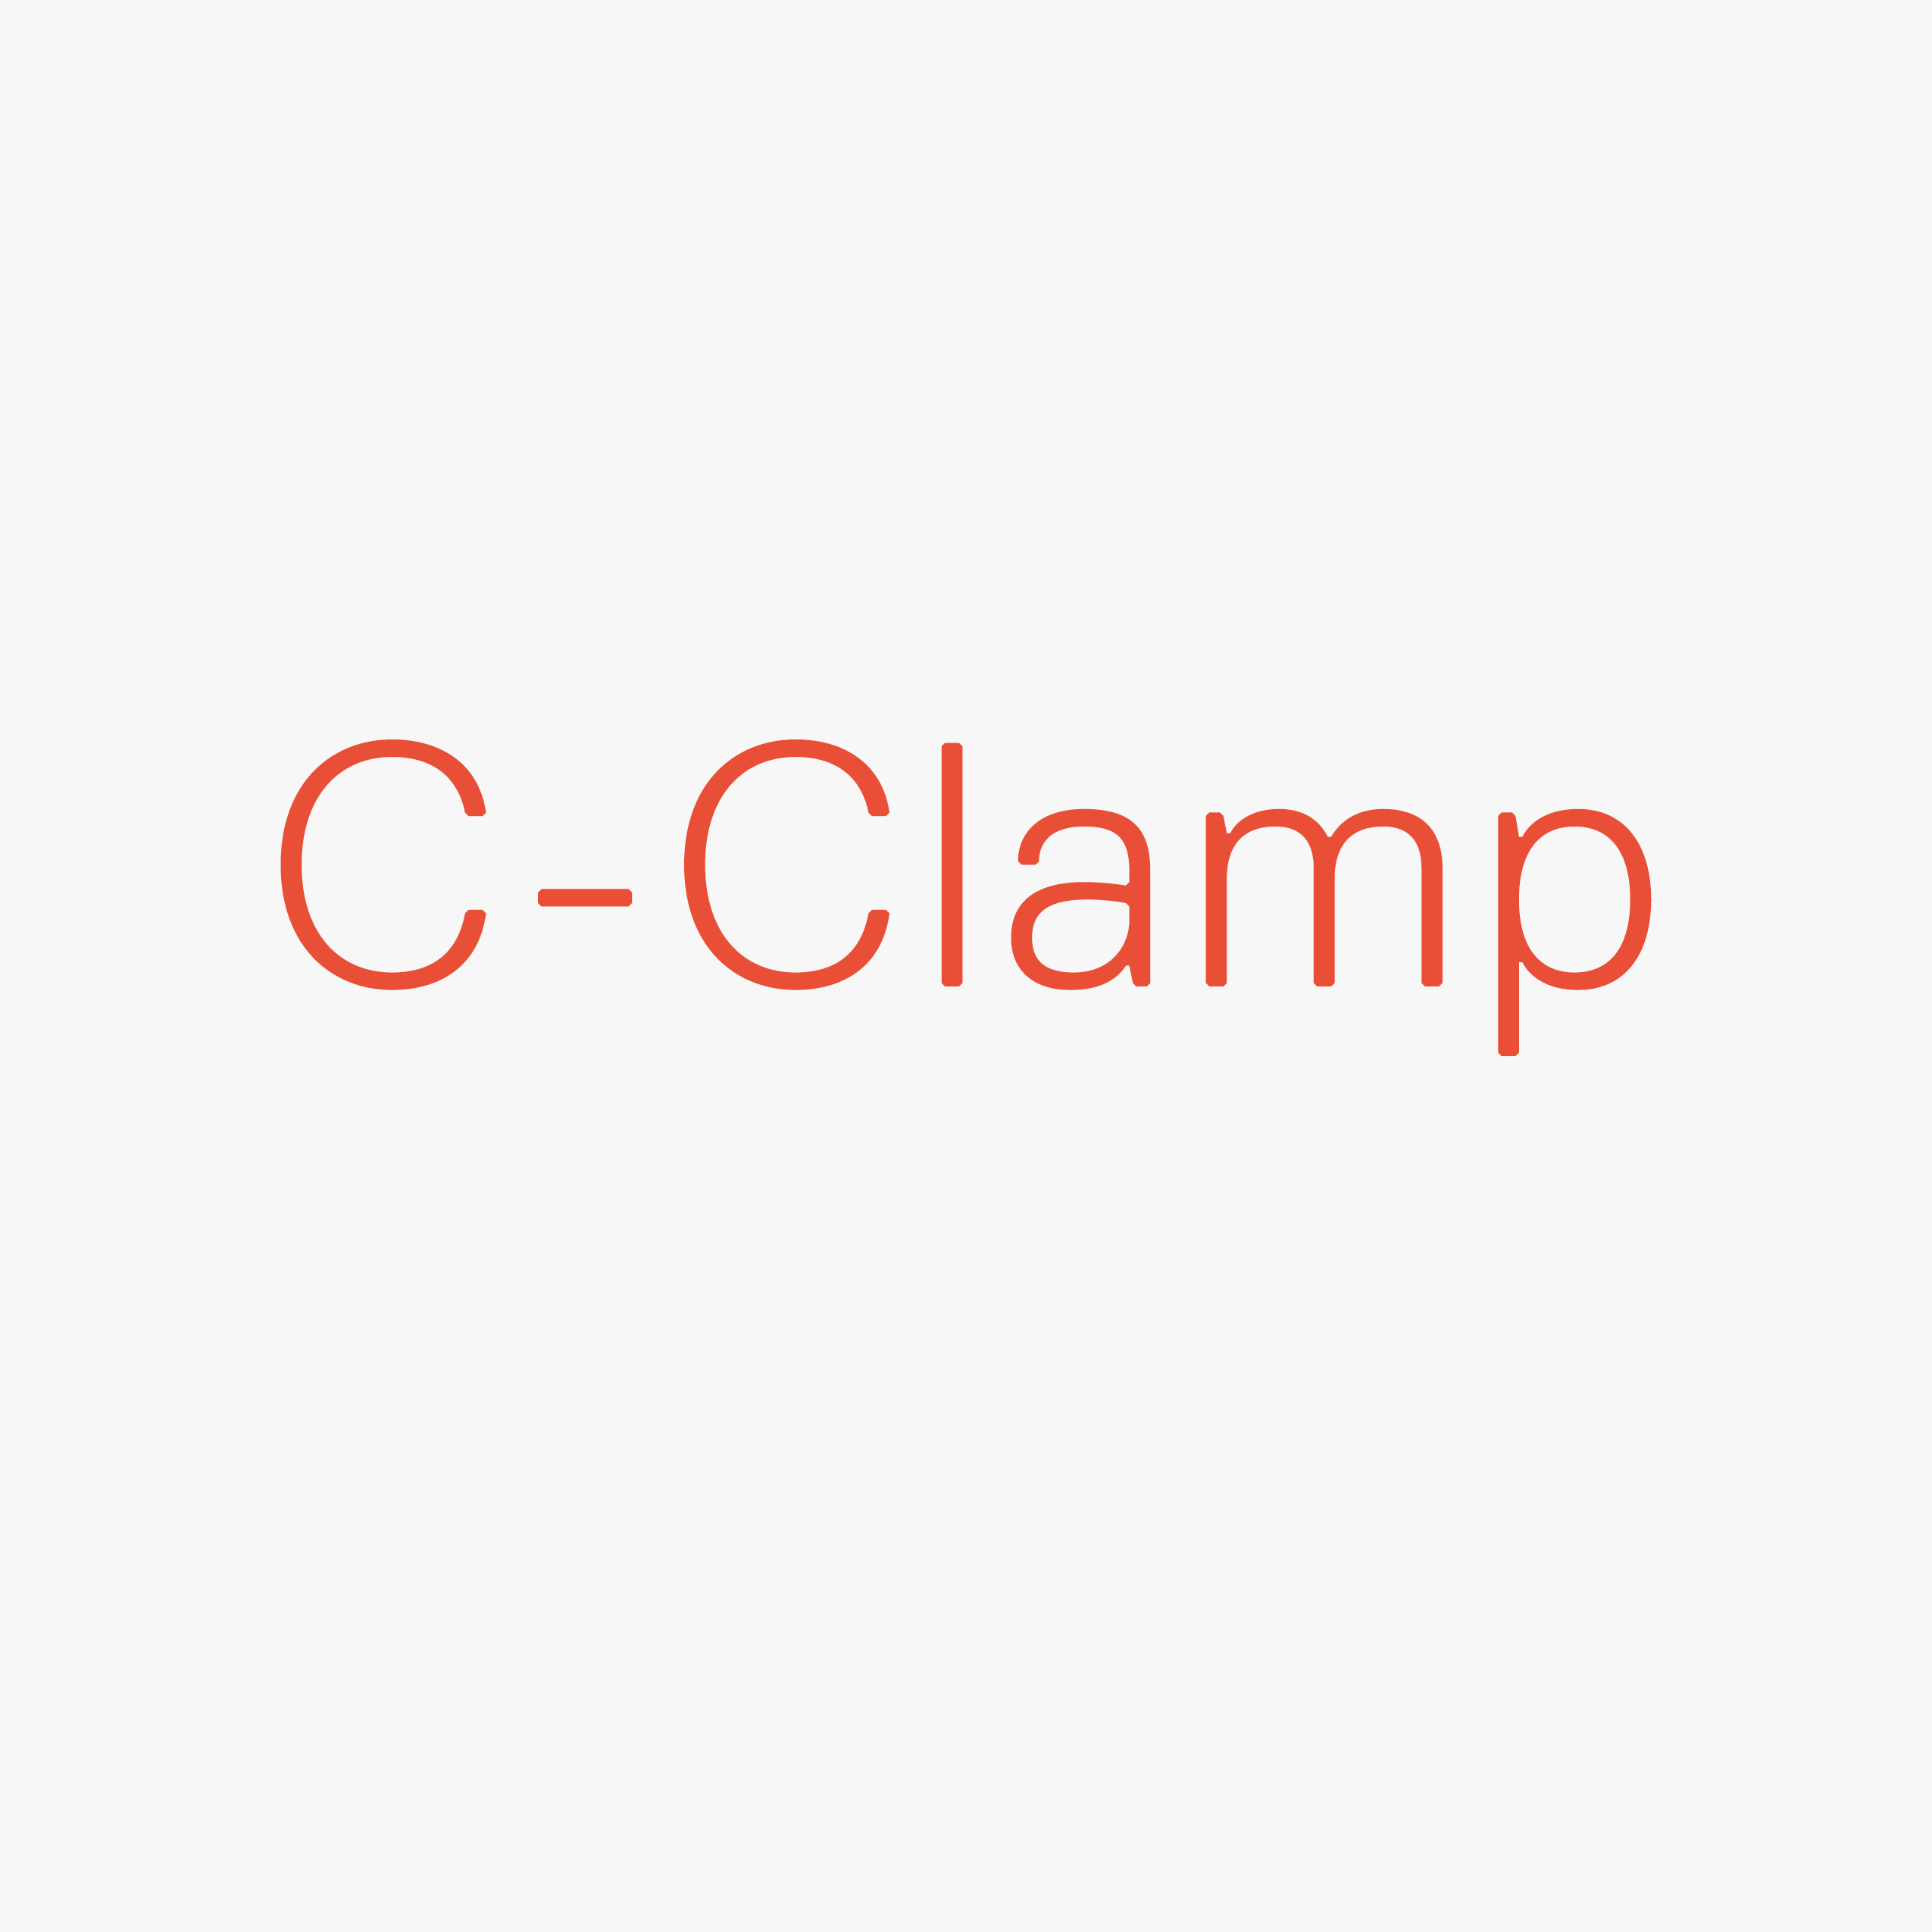 C Clamp Words